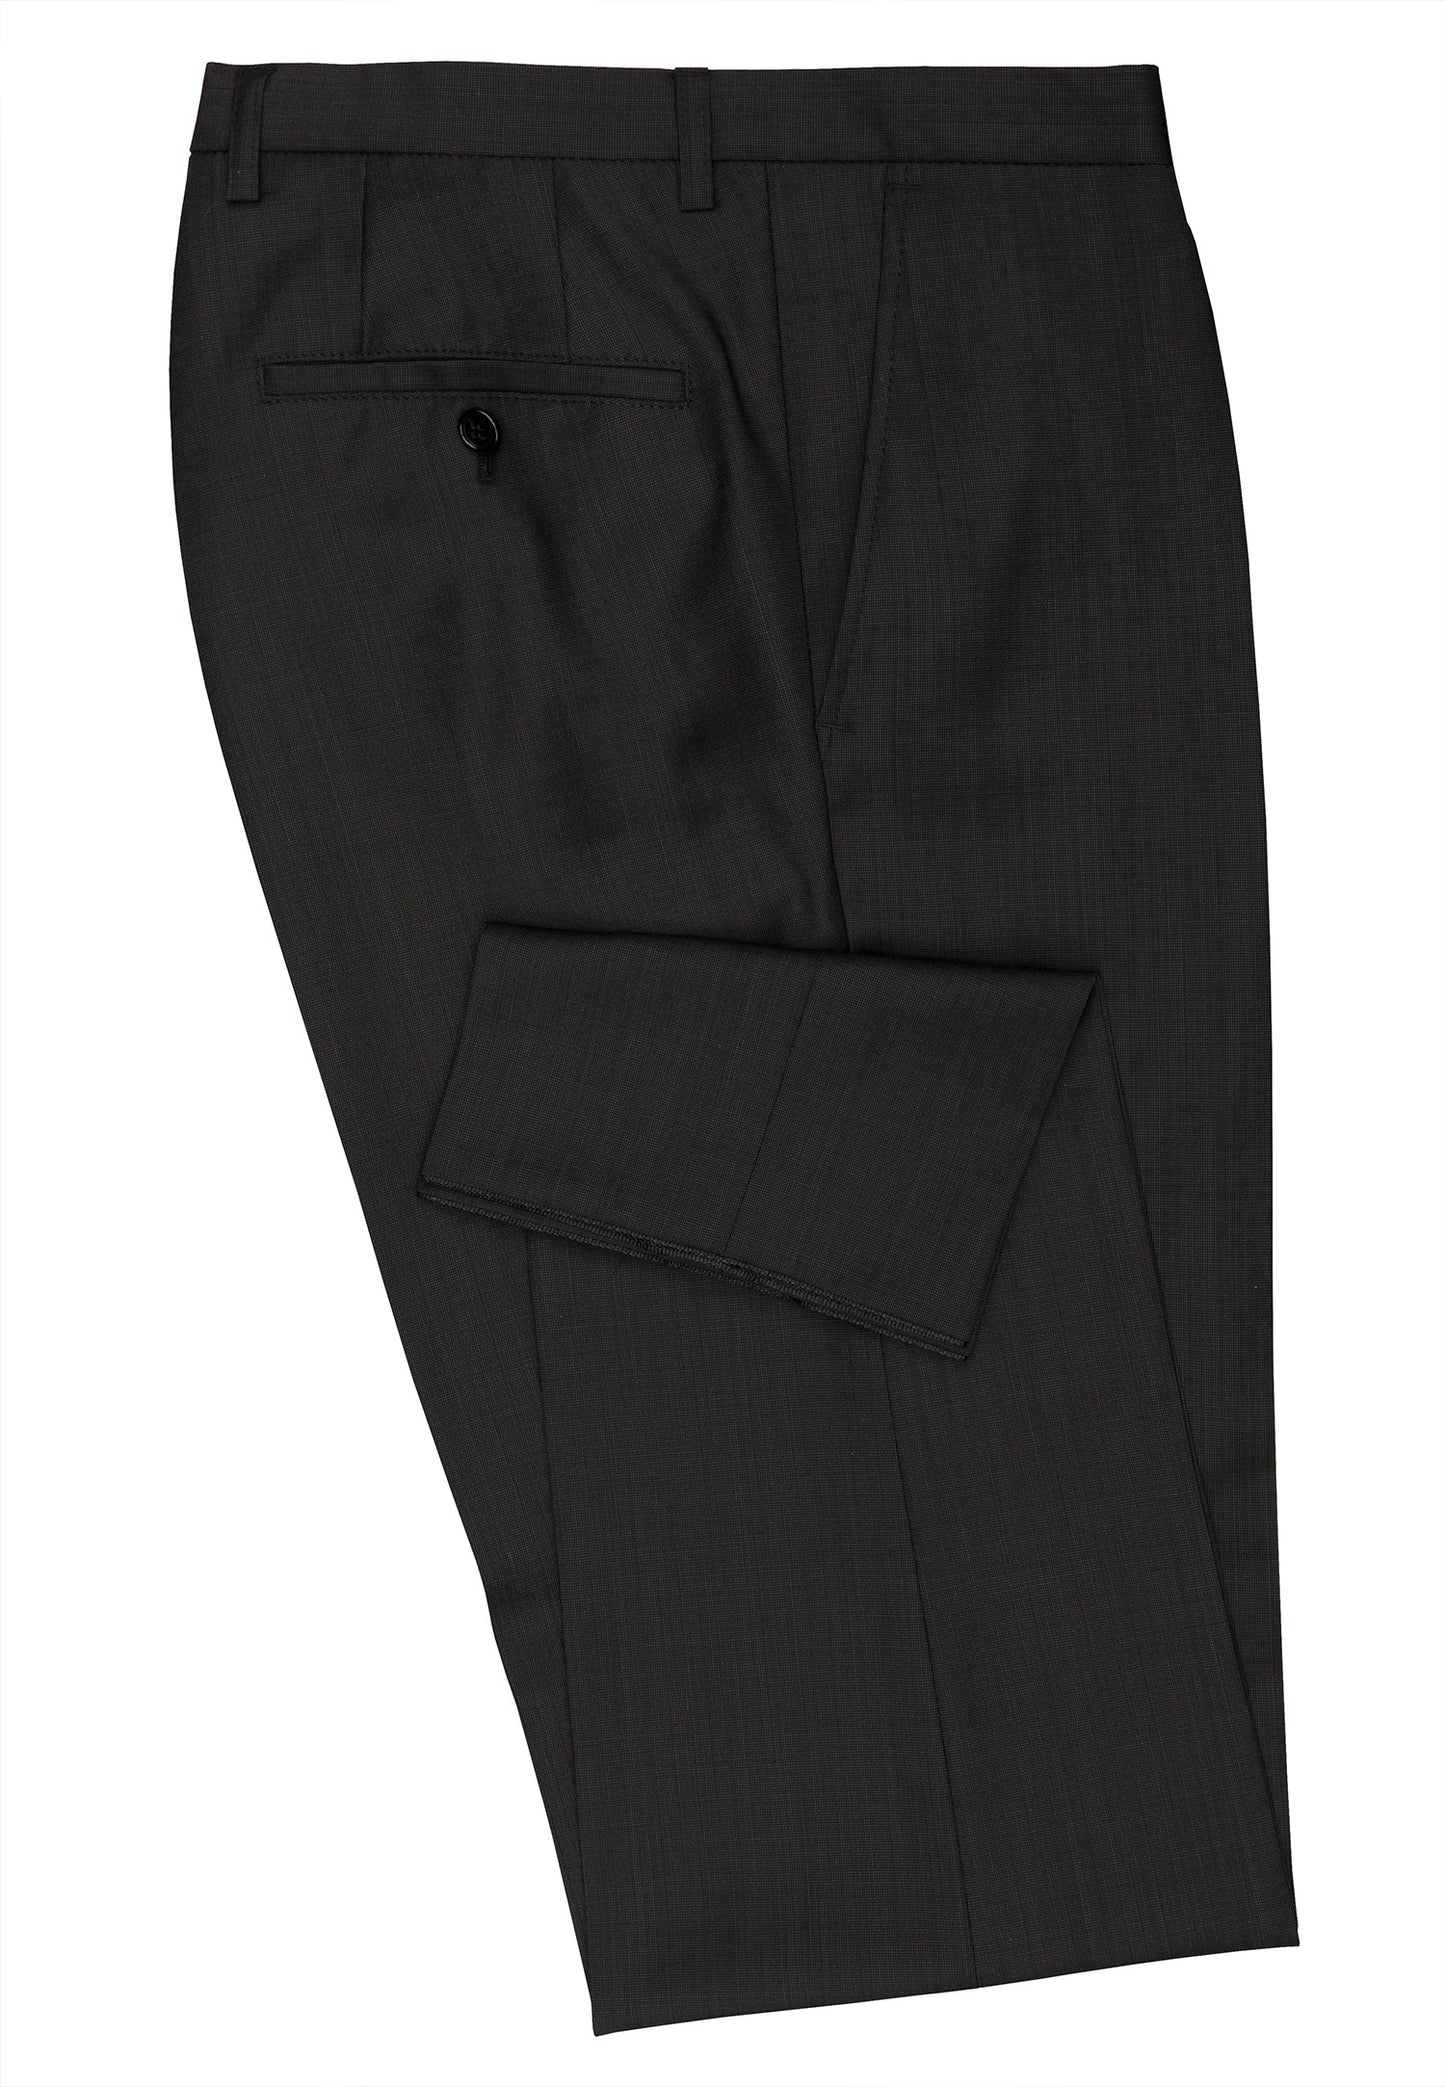 Hose/Trousers CG Archiebald - 20-023S0 / 433053